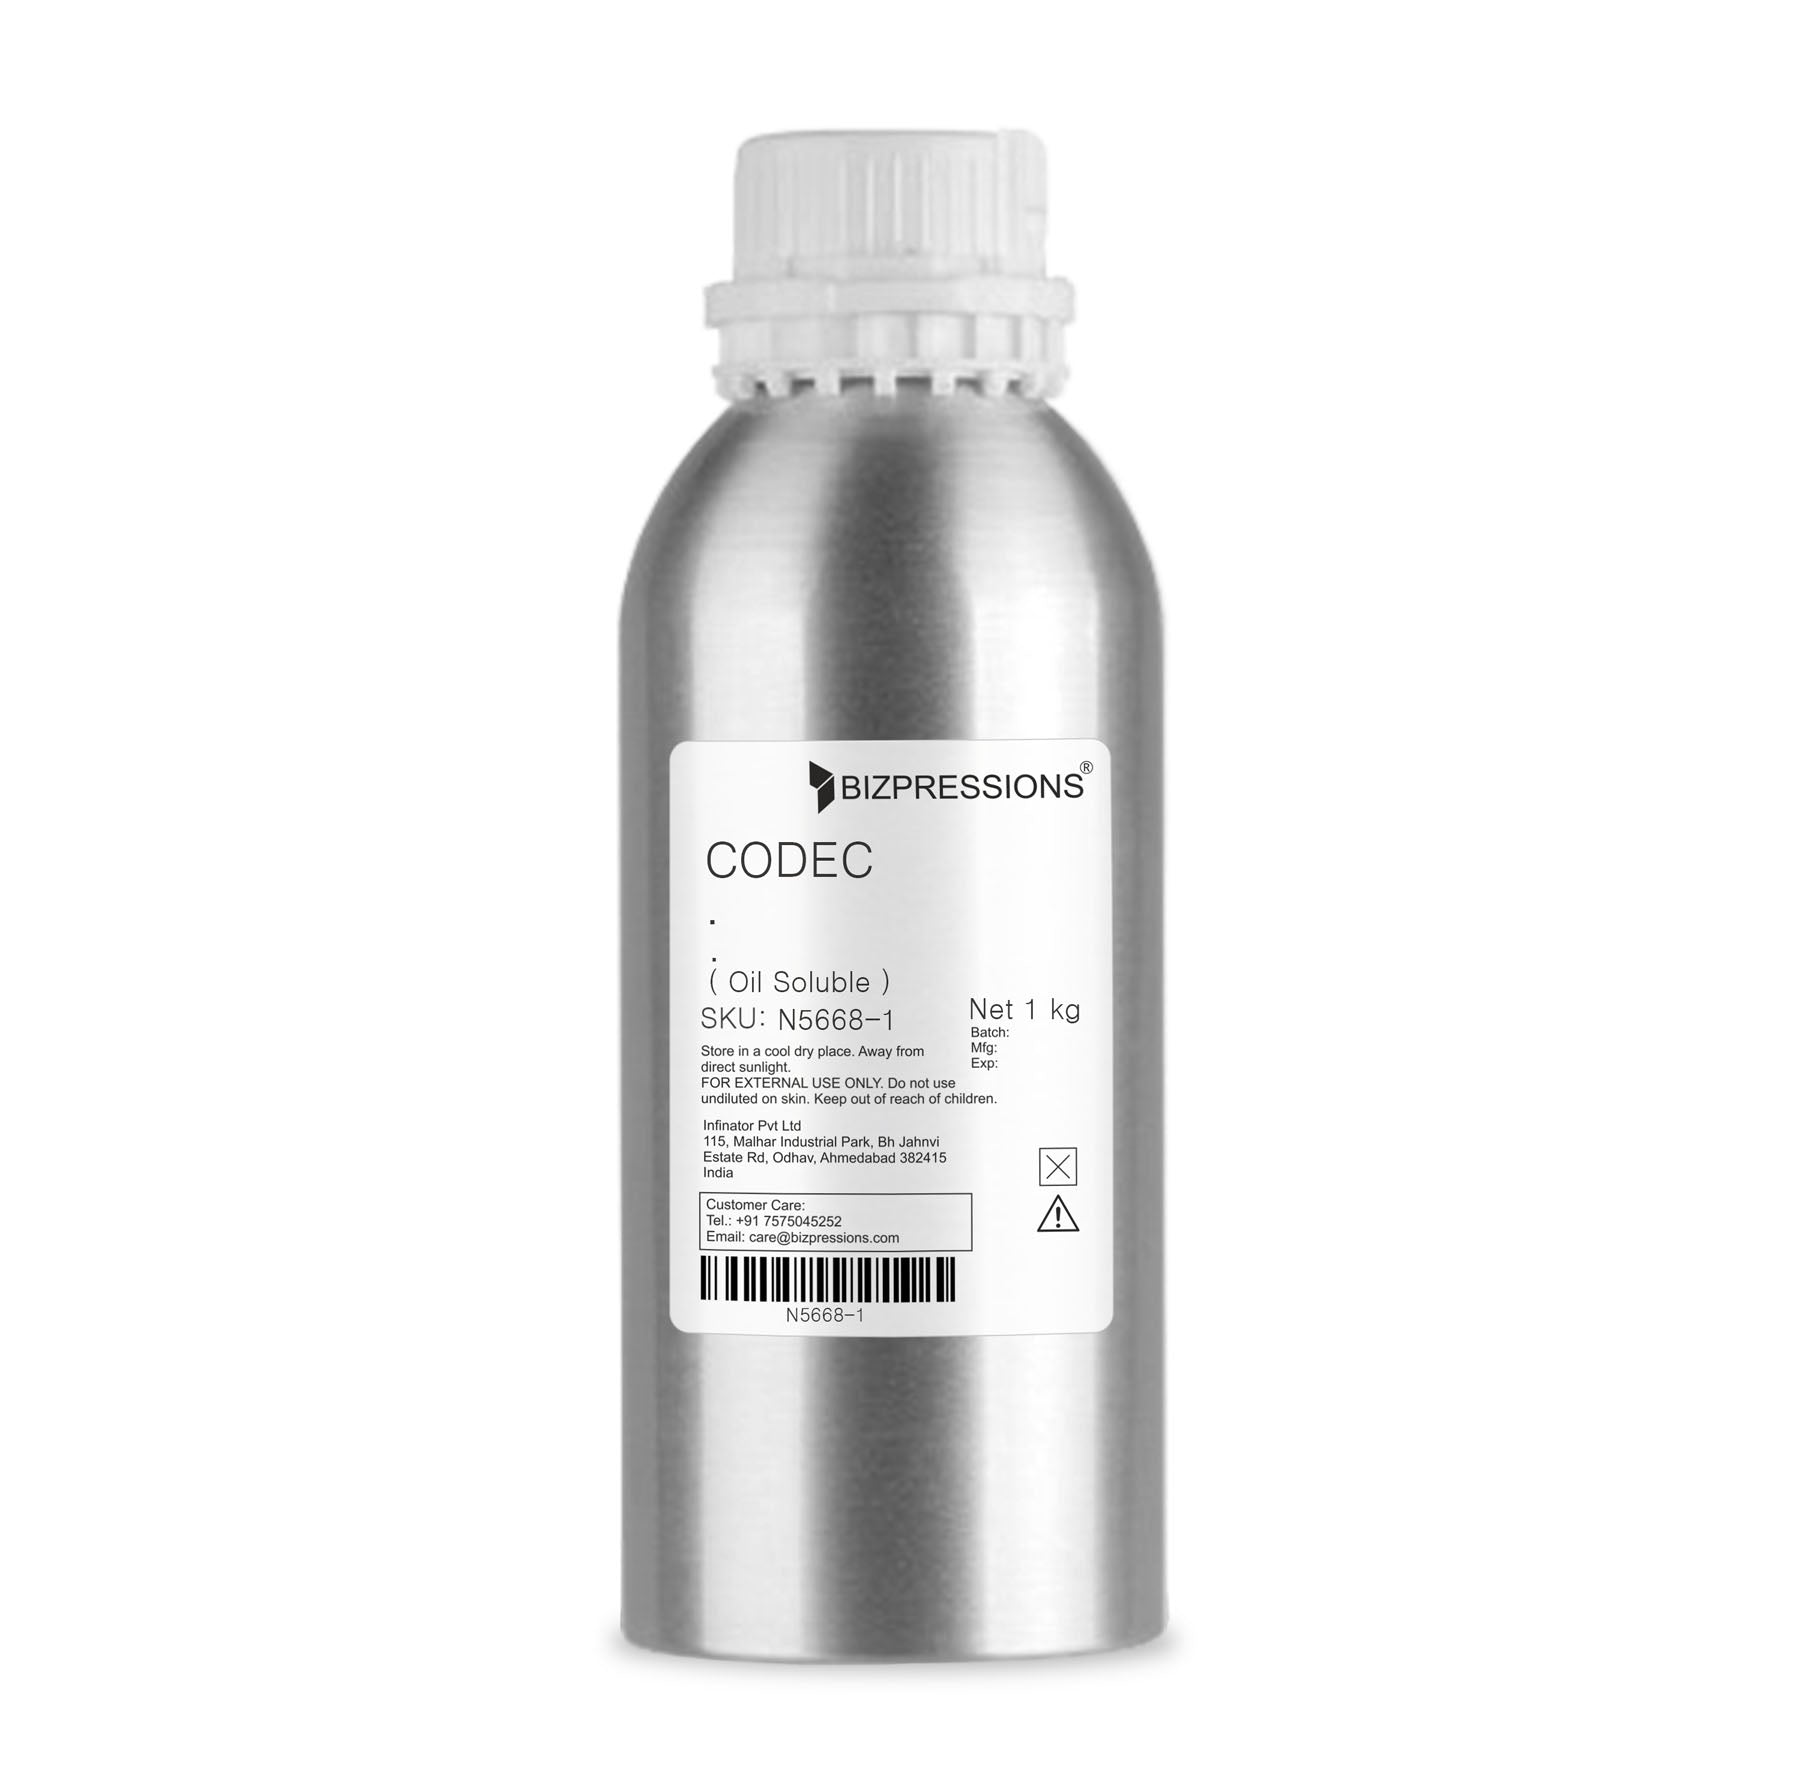 CODEC - Fragrance ( Oil Soluble ) - 1 kg